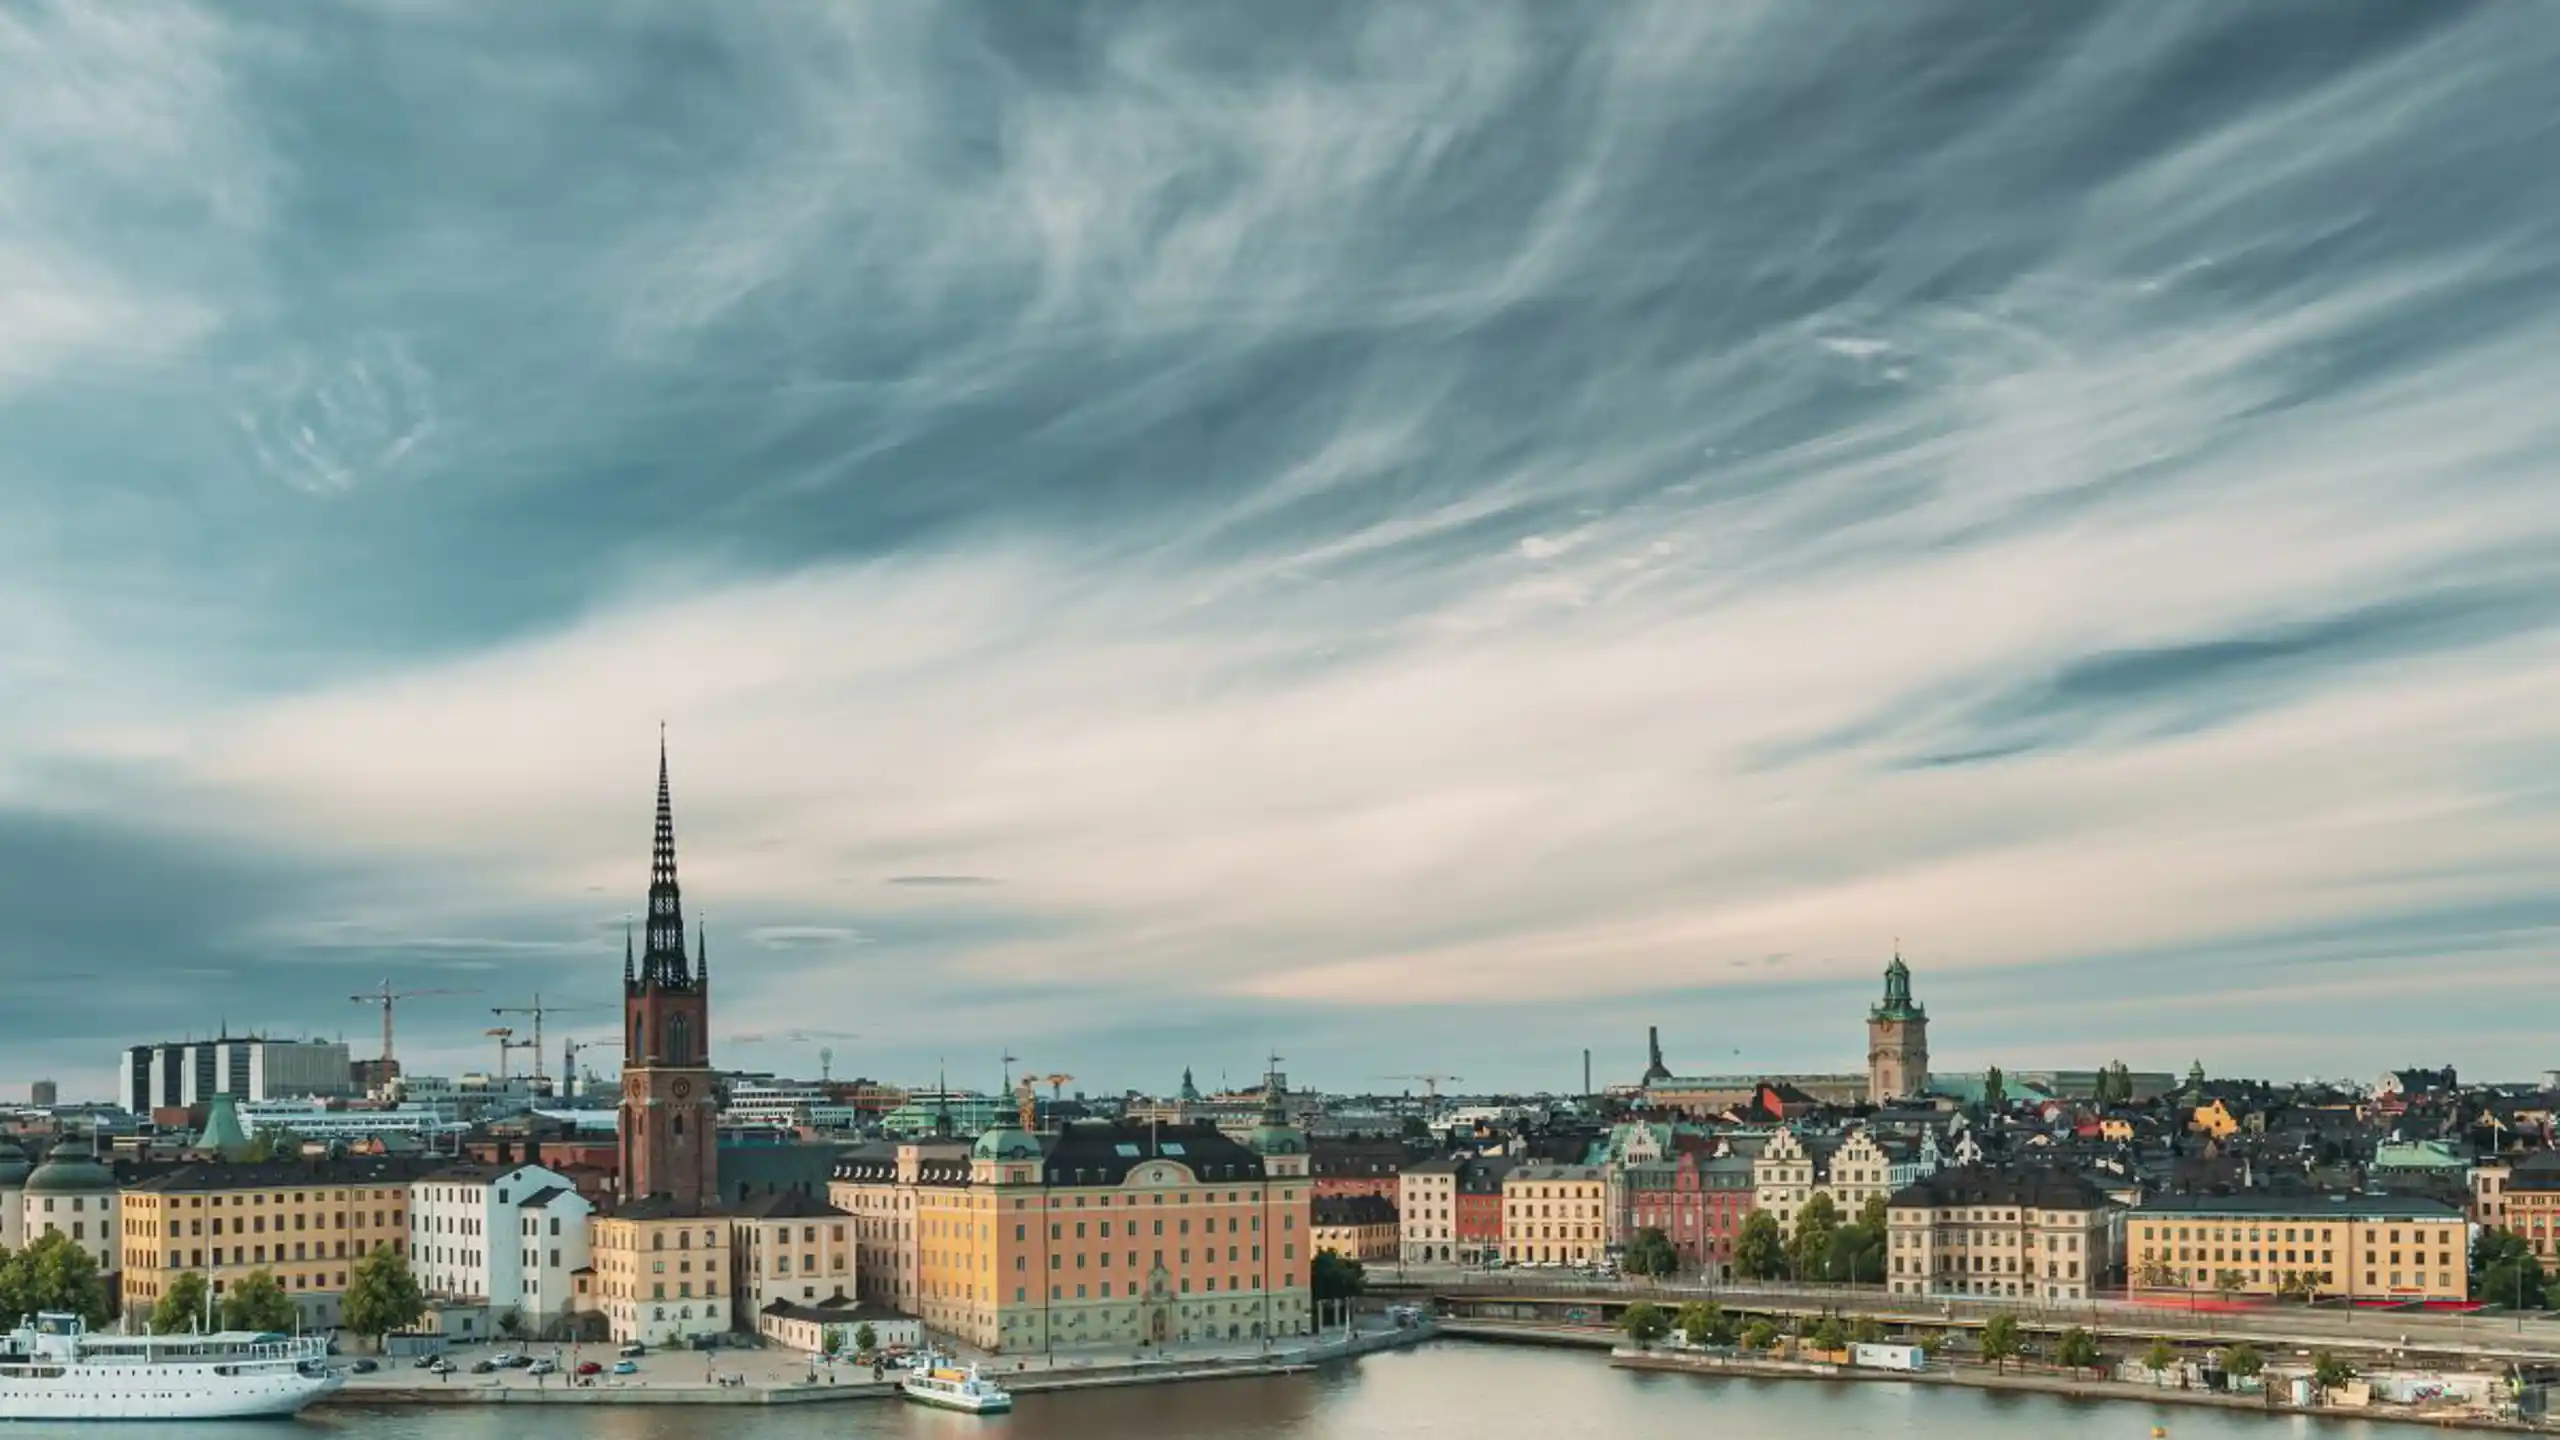 Stockholm Sweden Scenic Famous View Of Embankmen 2023 11 27 04 58 48 Utc (1)